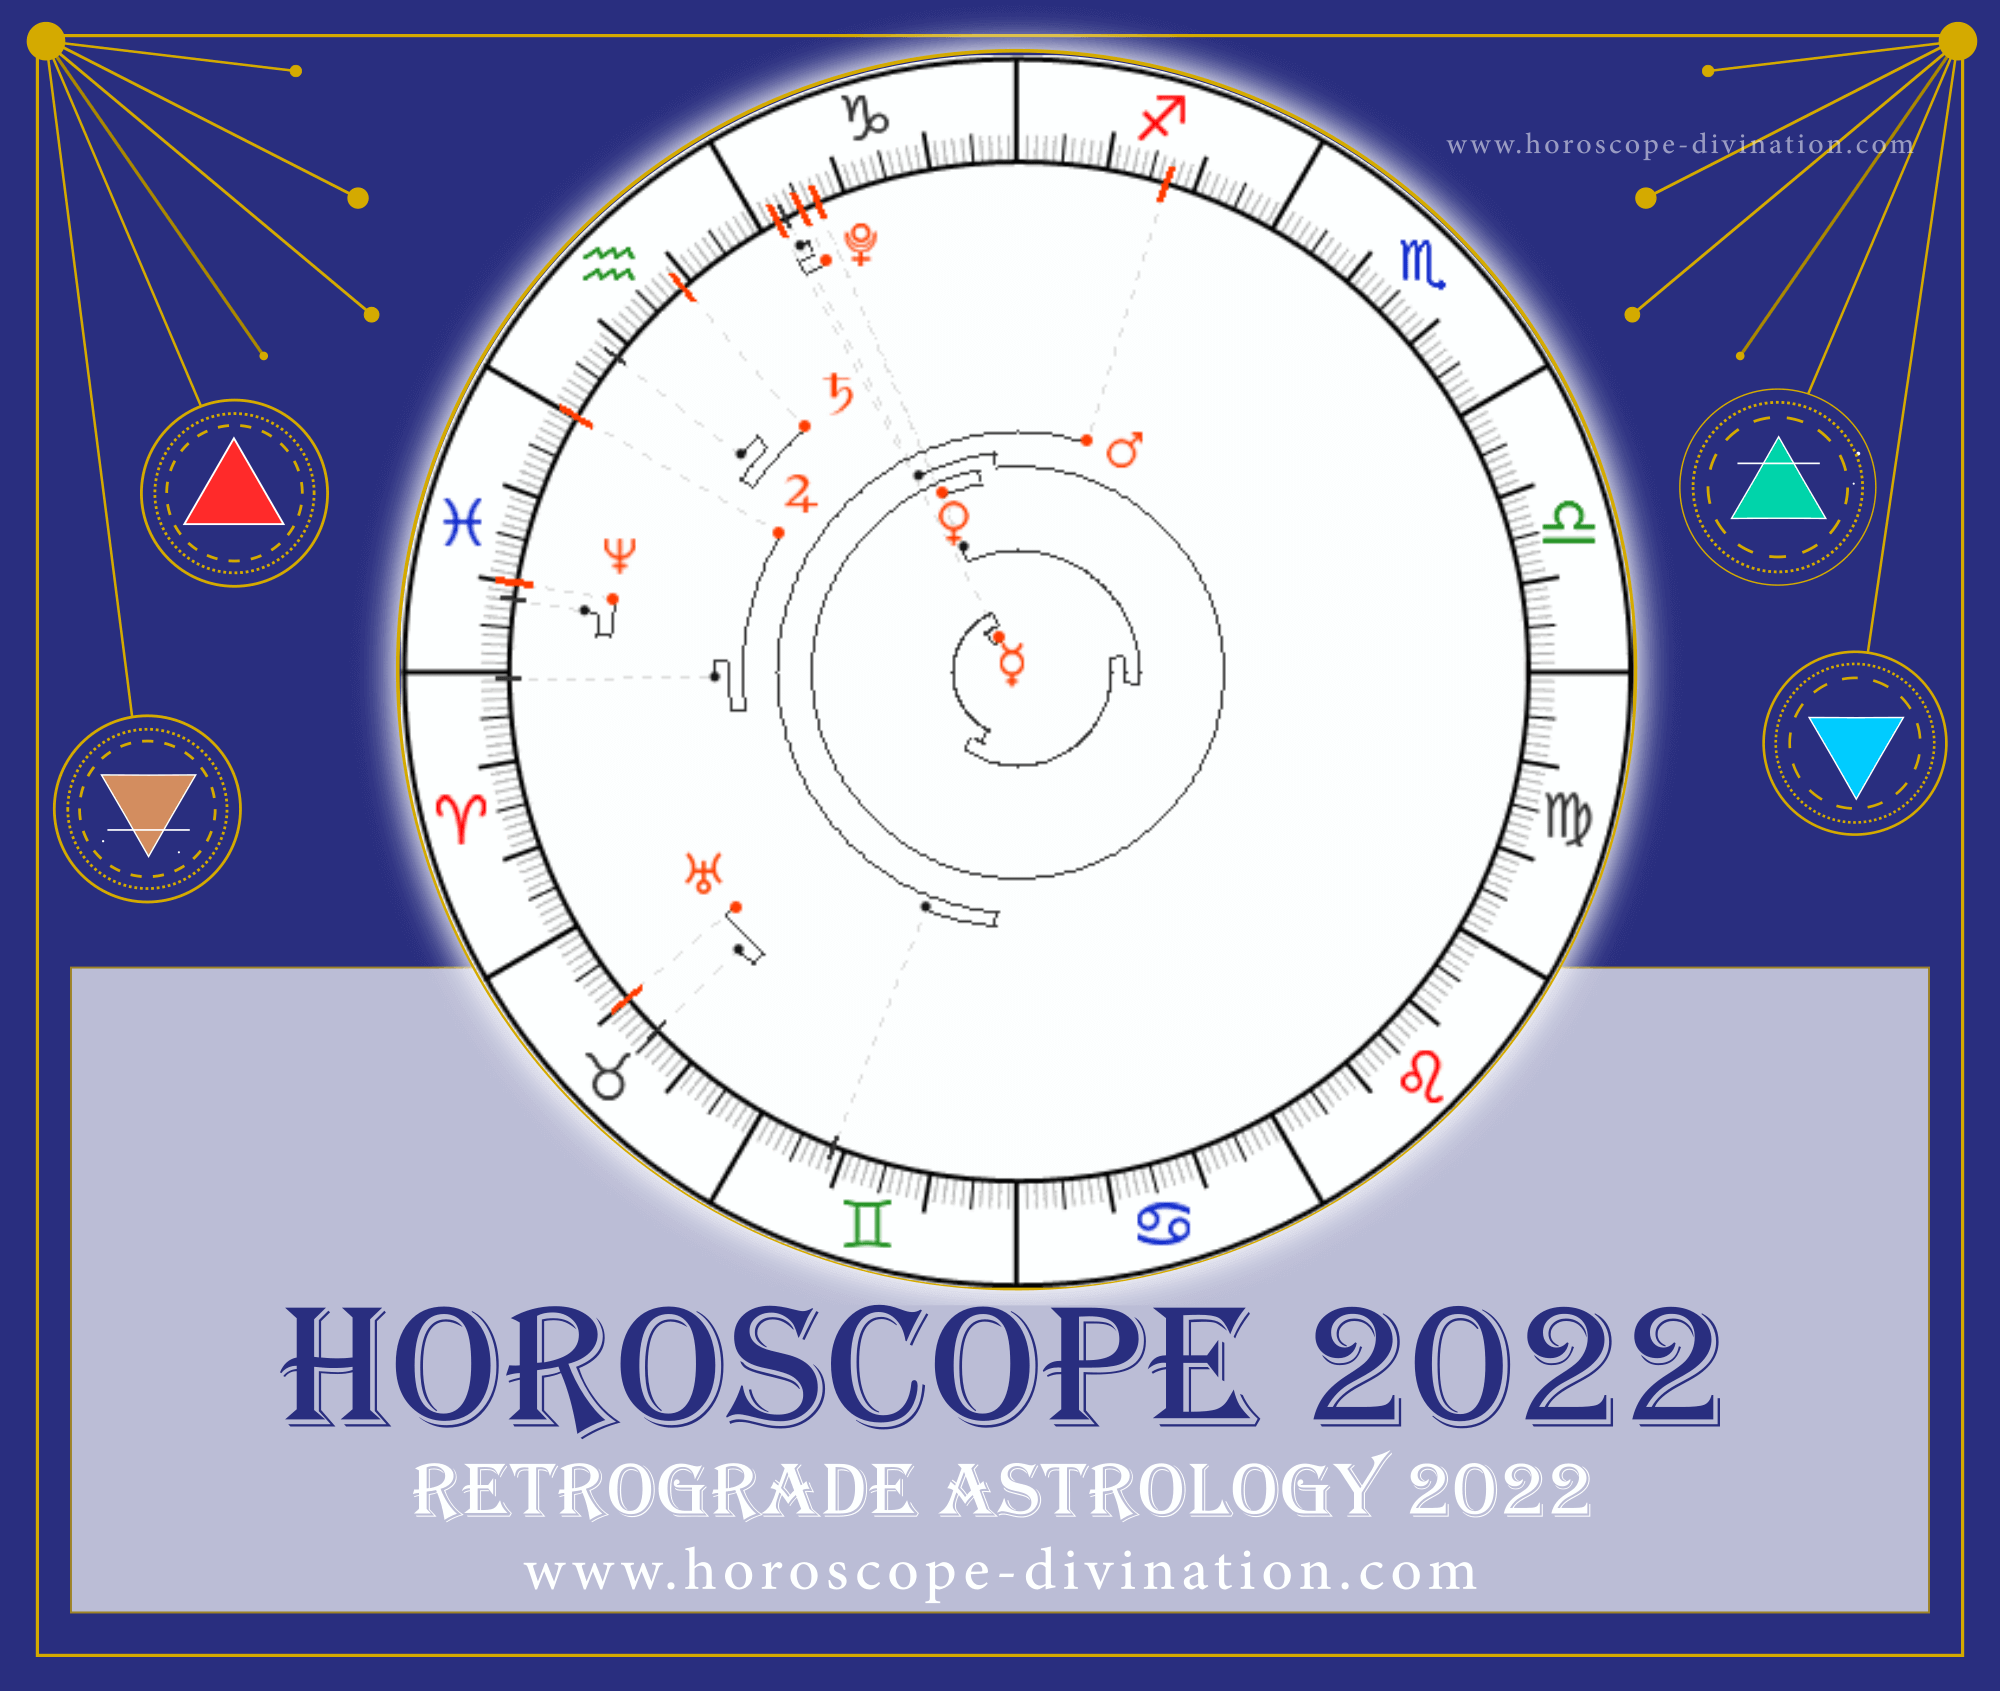 Retrograde Astrology 2022 - graph of Horoscope 2022 Leo